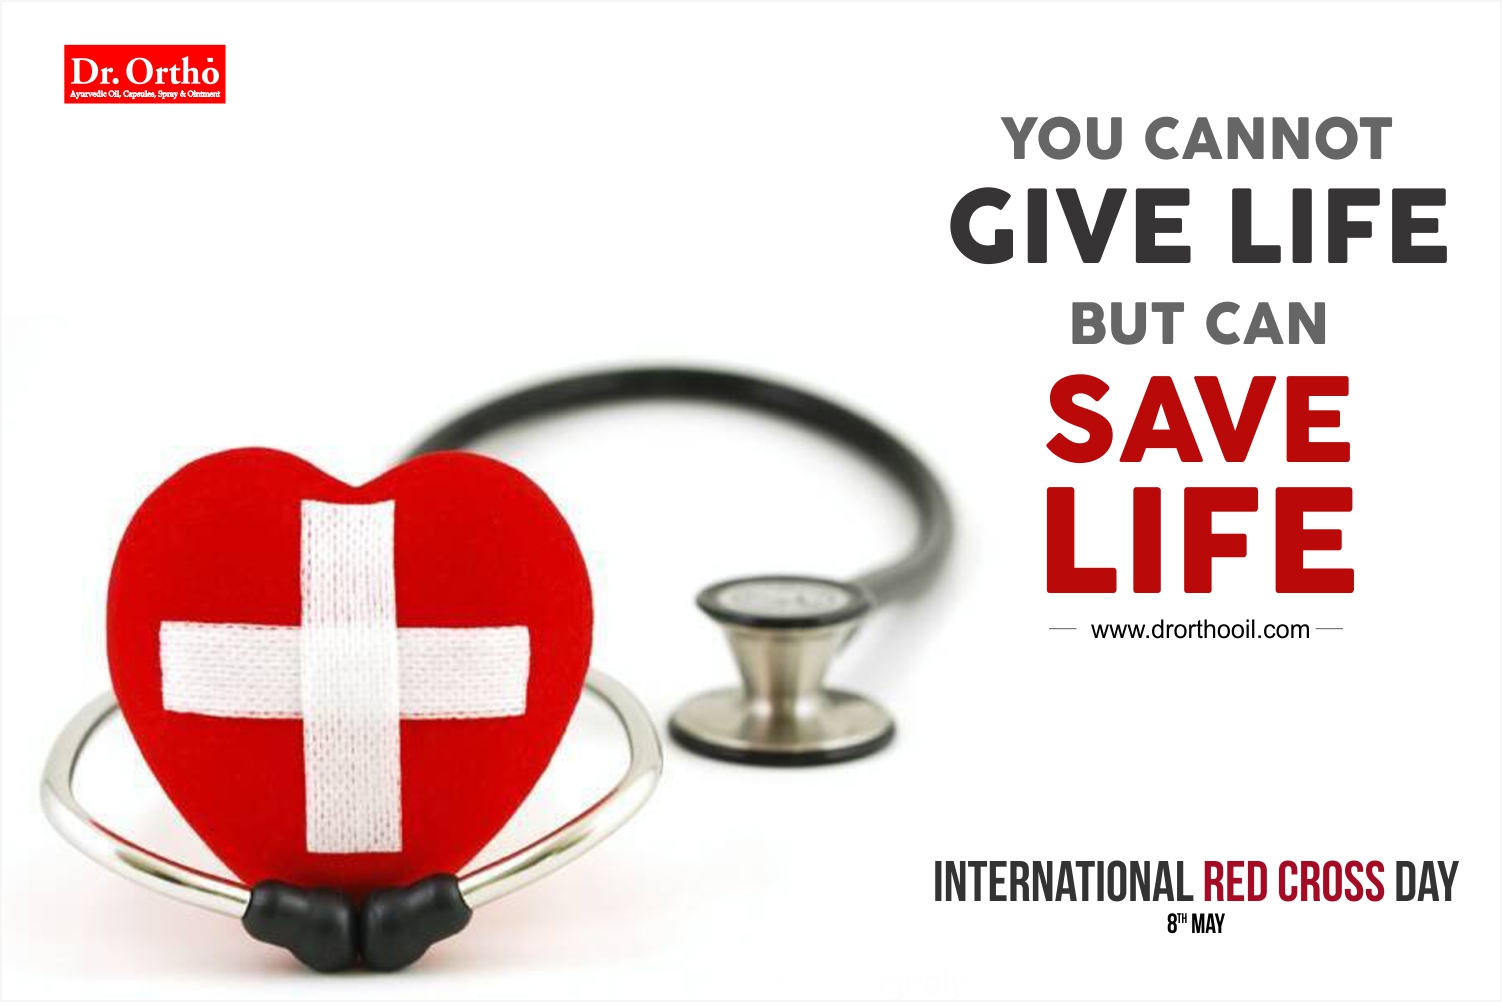 8 May - International Red Cross Day